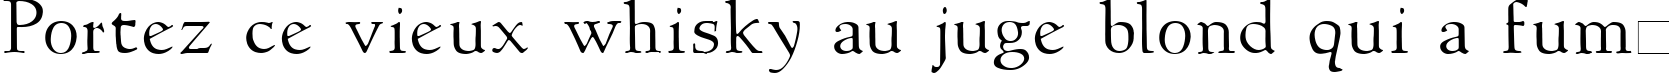 Пример написания шрифтом NewStyleLight текста на французском